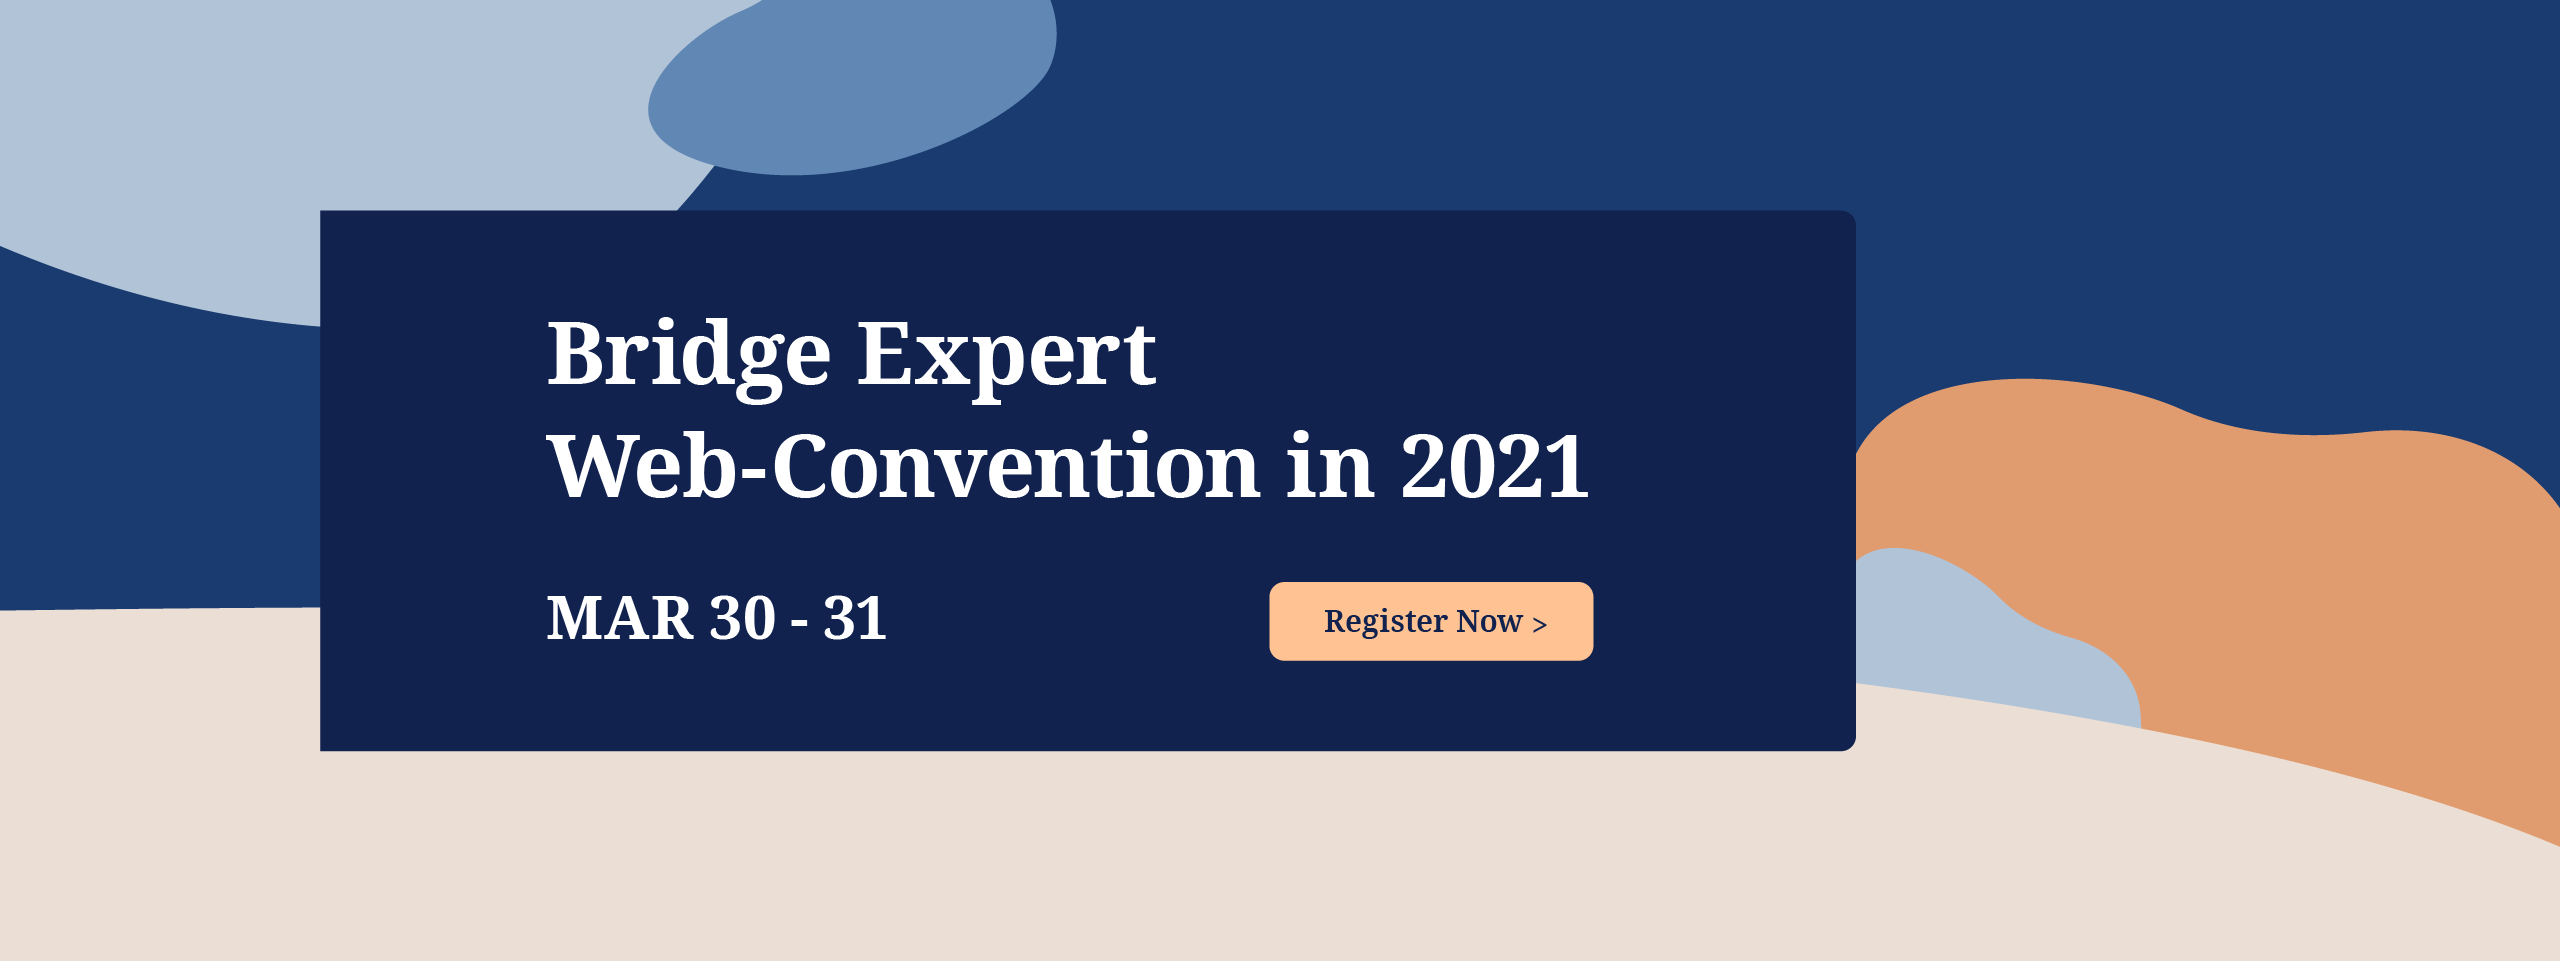 Bridge Expert Web-Convention in 2021